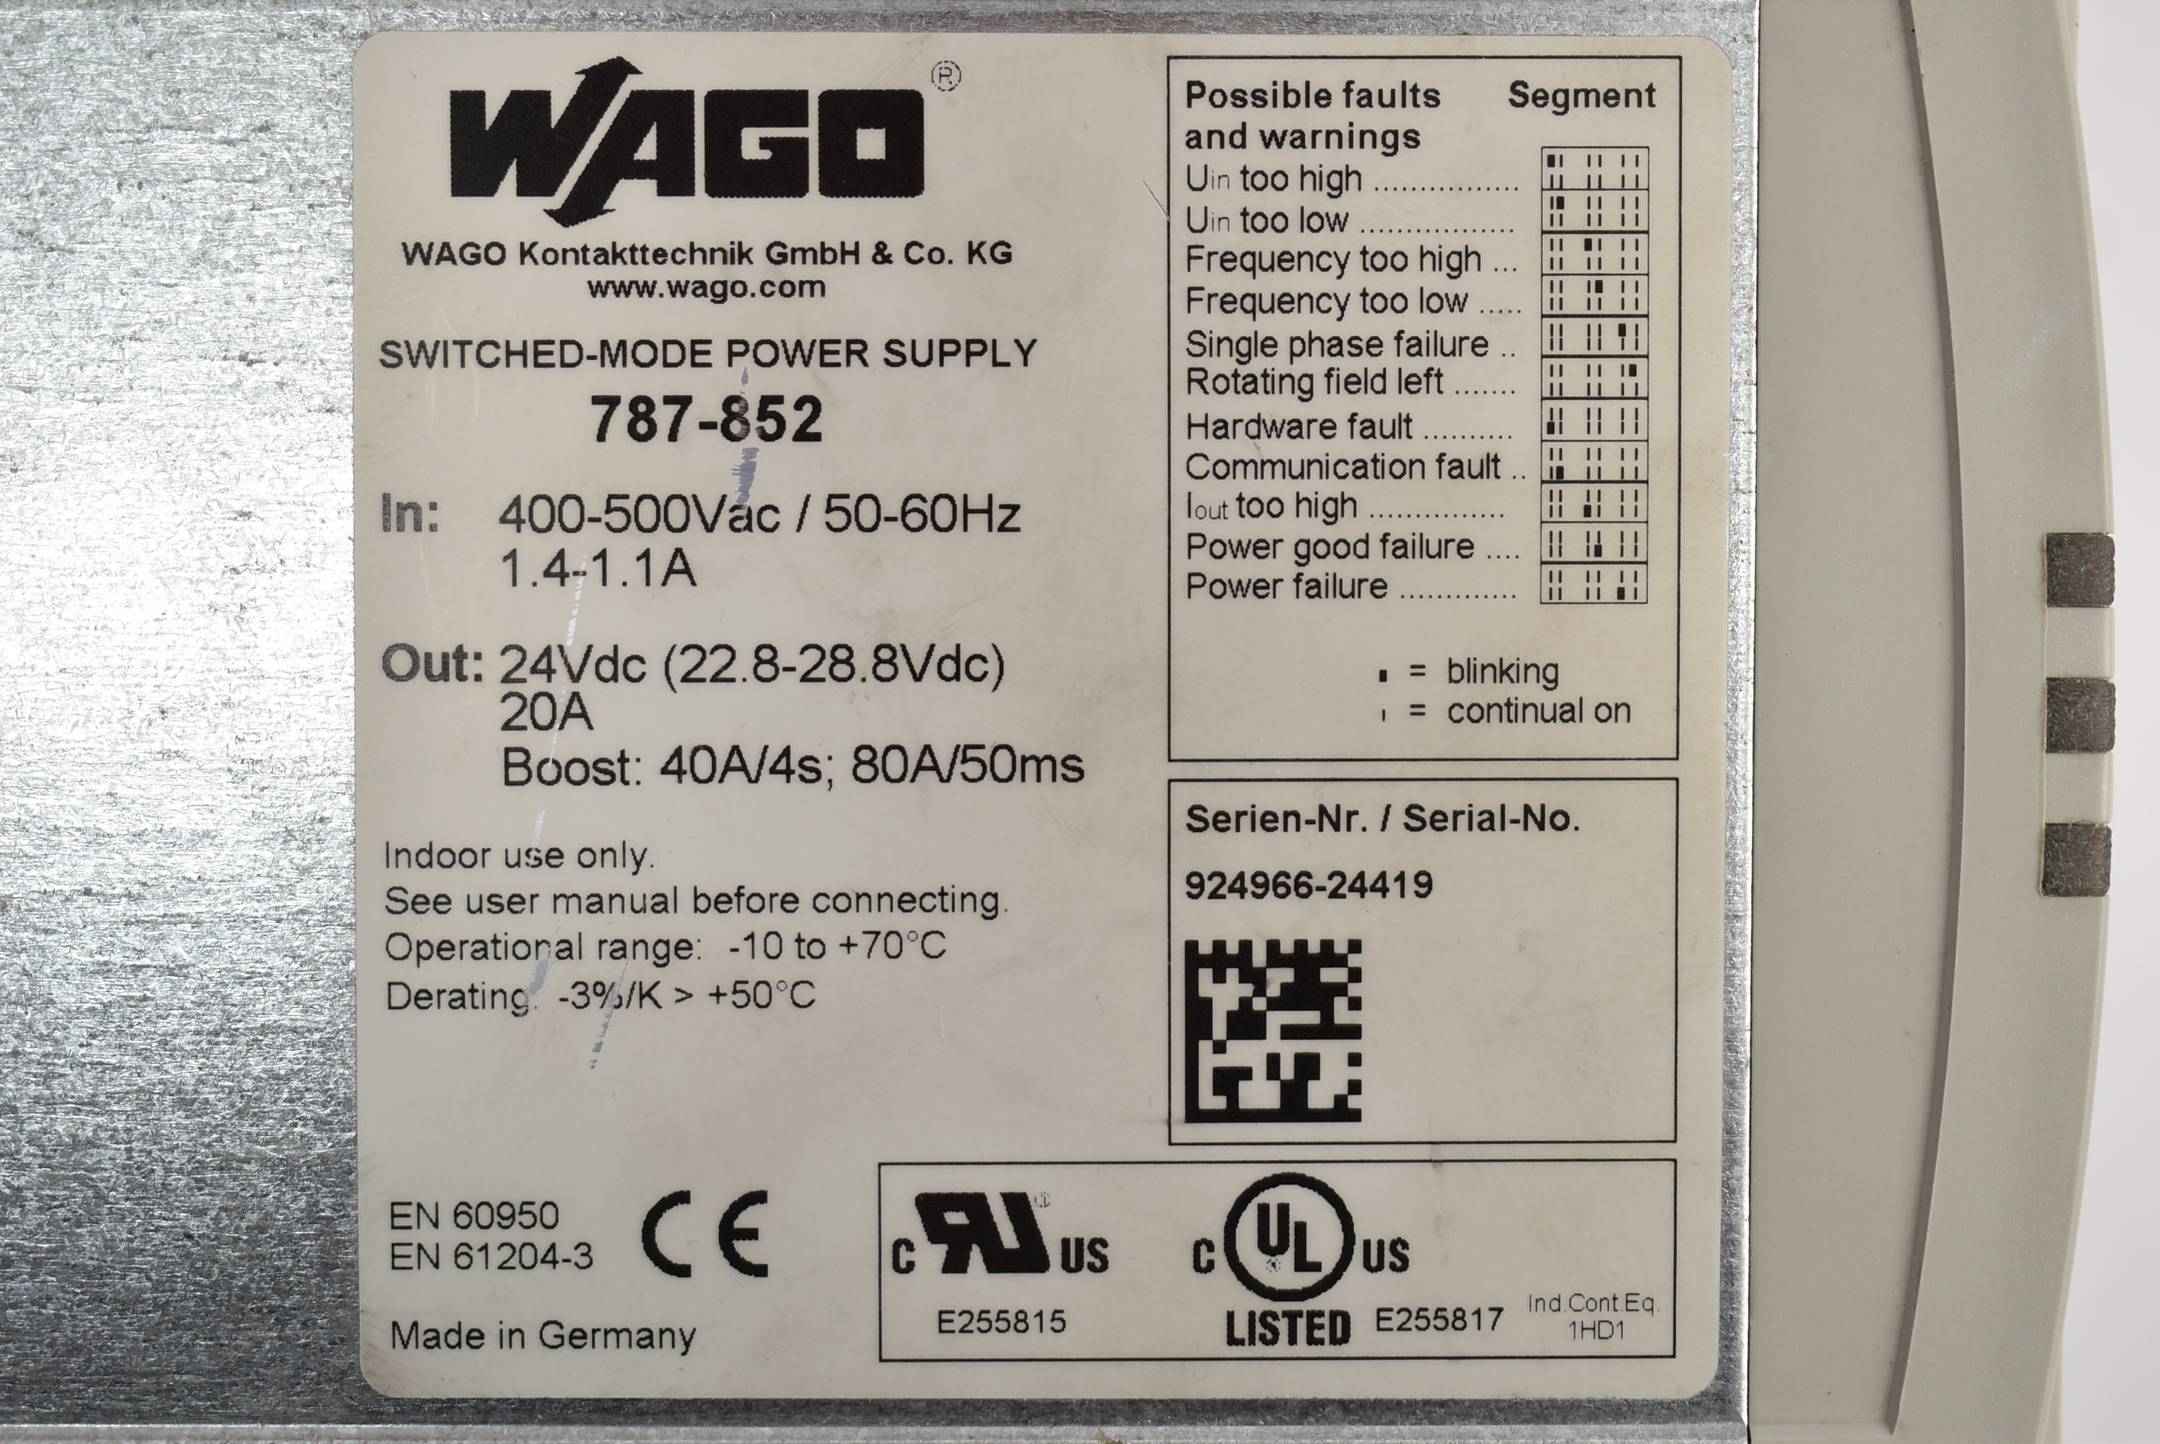 Wago Switches-Mode Power Supply 400-500Vac 50-60Hz 787-852 